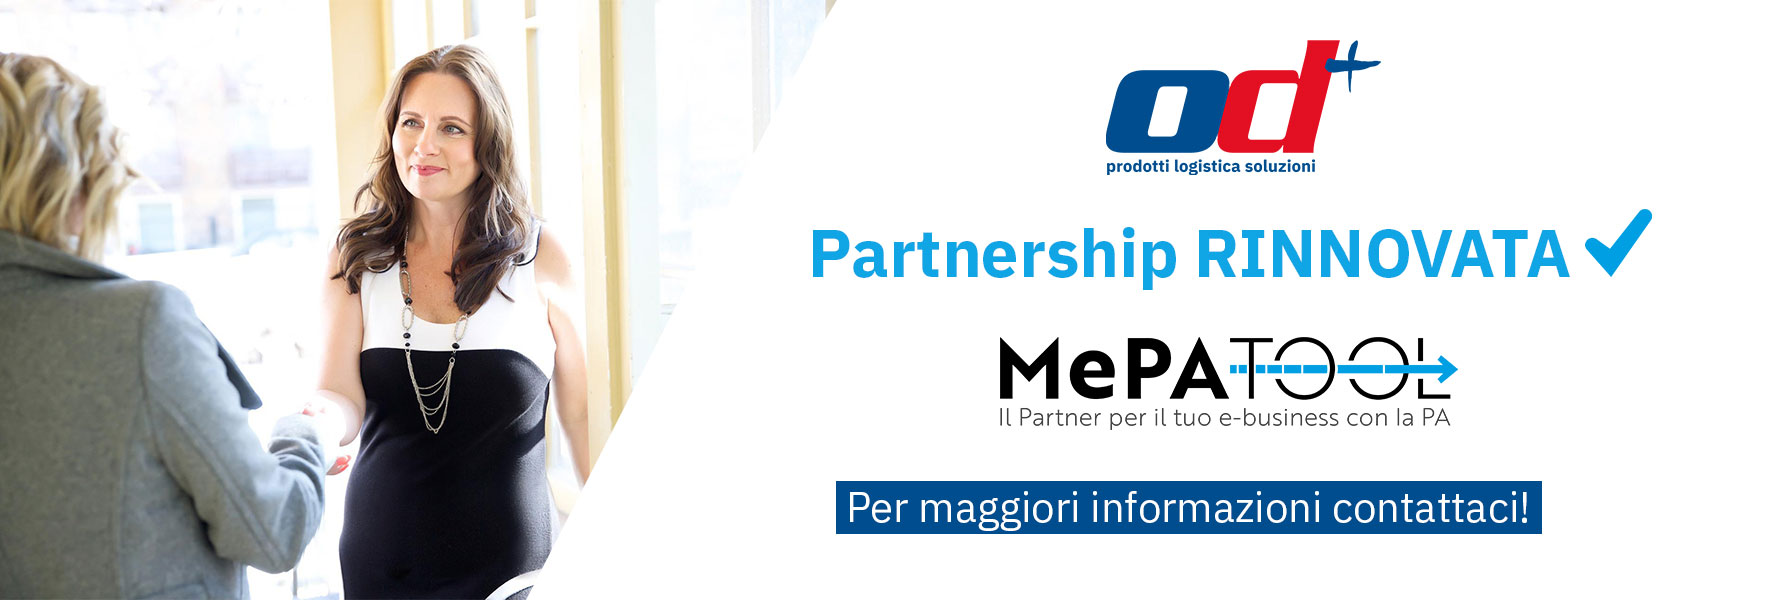 OD partnership mepatool